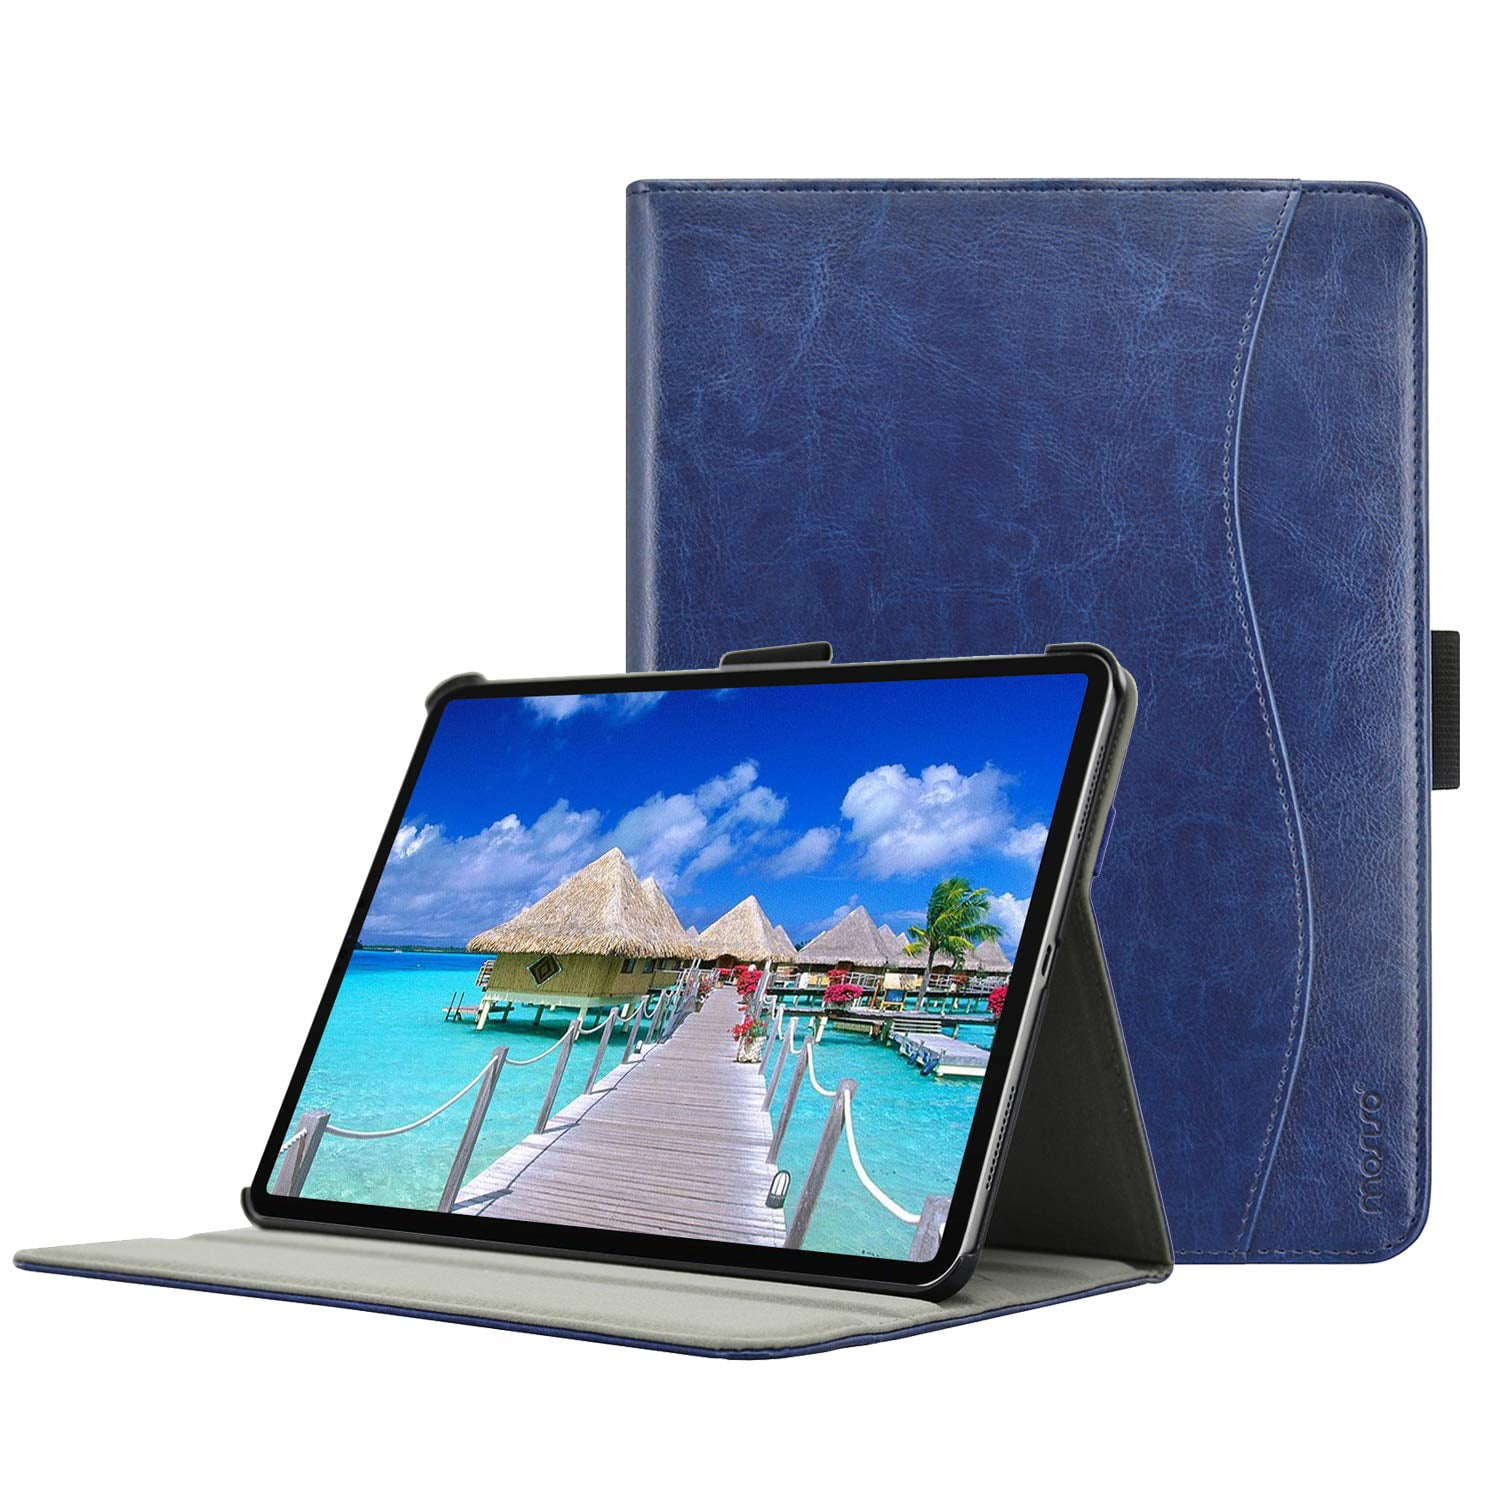 iPad Air 3 10.5 2019 Rouge Surface Go 2018 MOSISO Tablette Housse Compatible avec 9.7-11 Pouces iPad Pro Sleeve Polyester Verticale Hydrofuge Sac avec Poche Accessoires iPad 1/2/3/4 